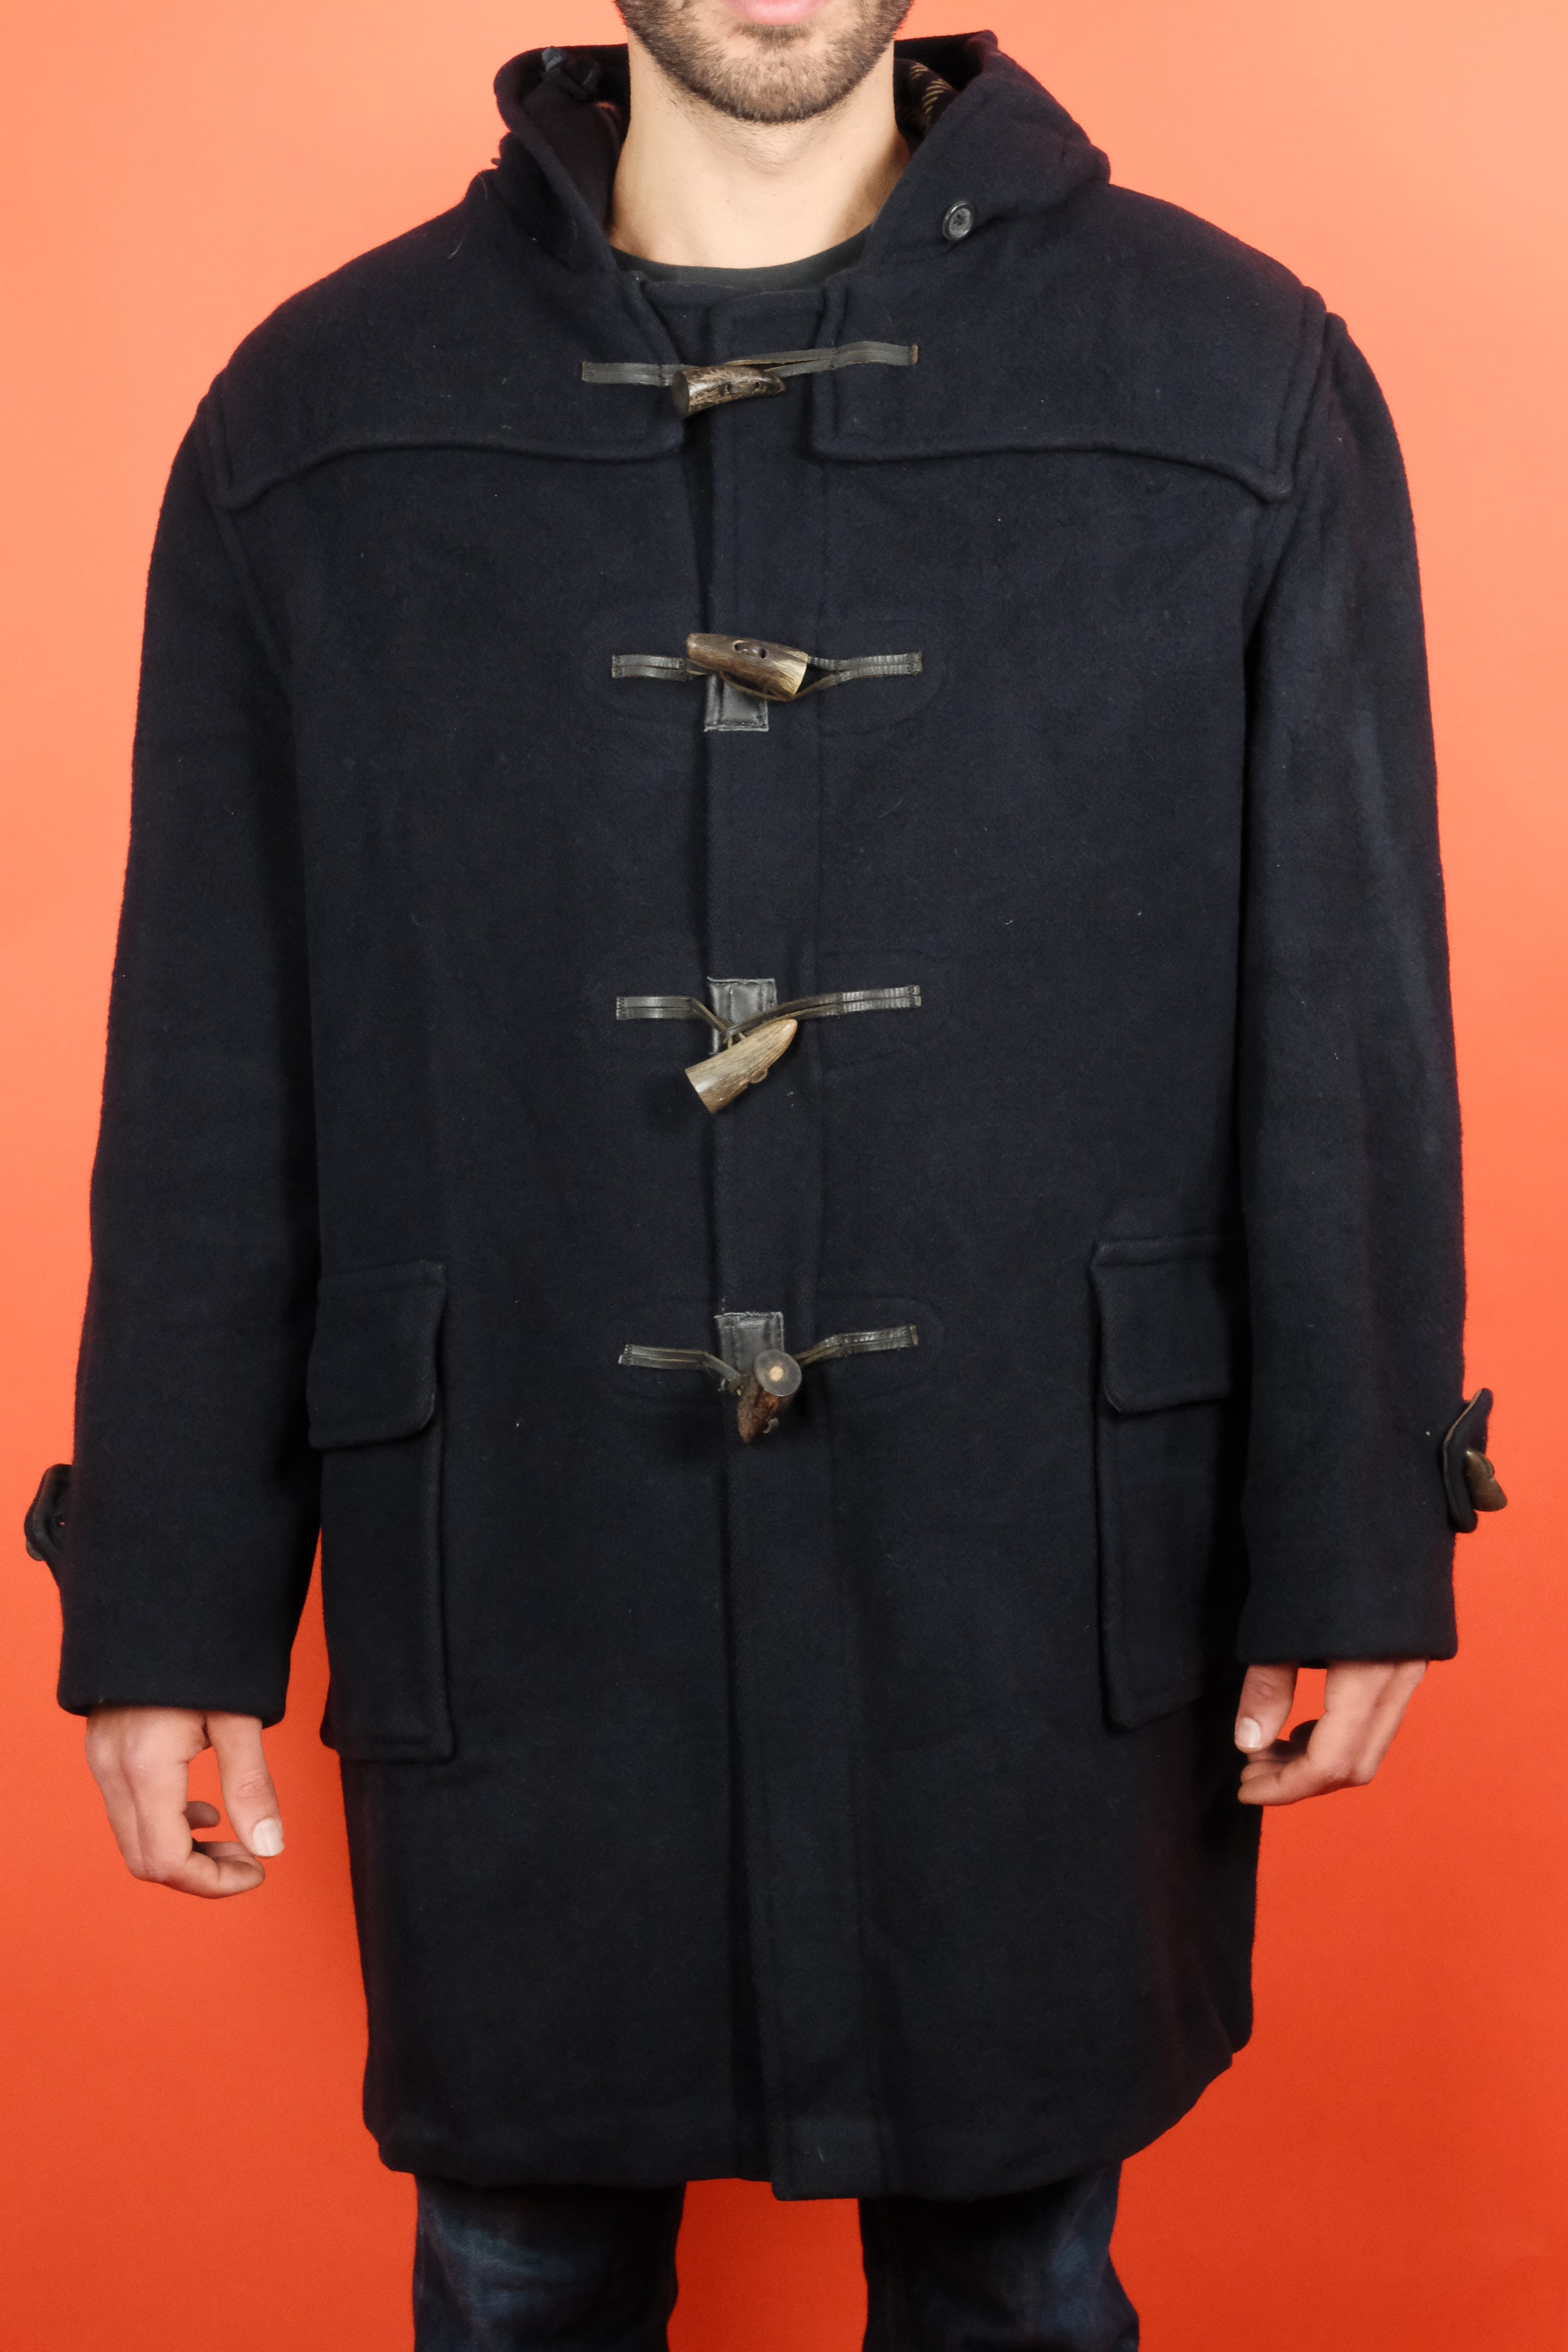 Vintage Montgomery Coats for Men ~ Clochard92.com